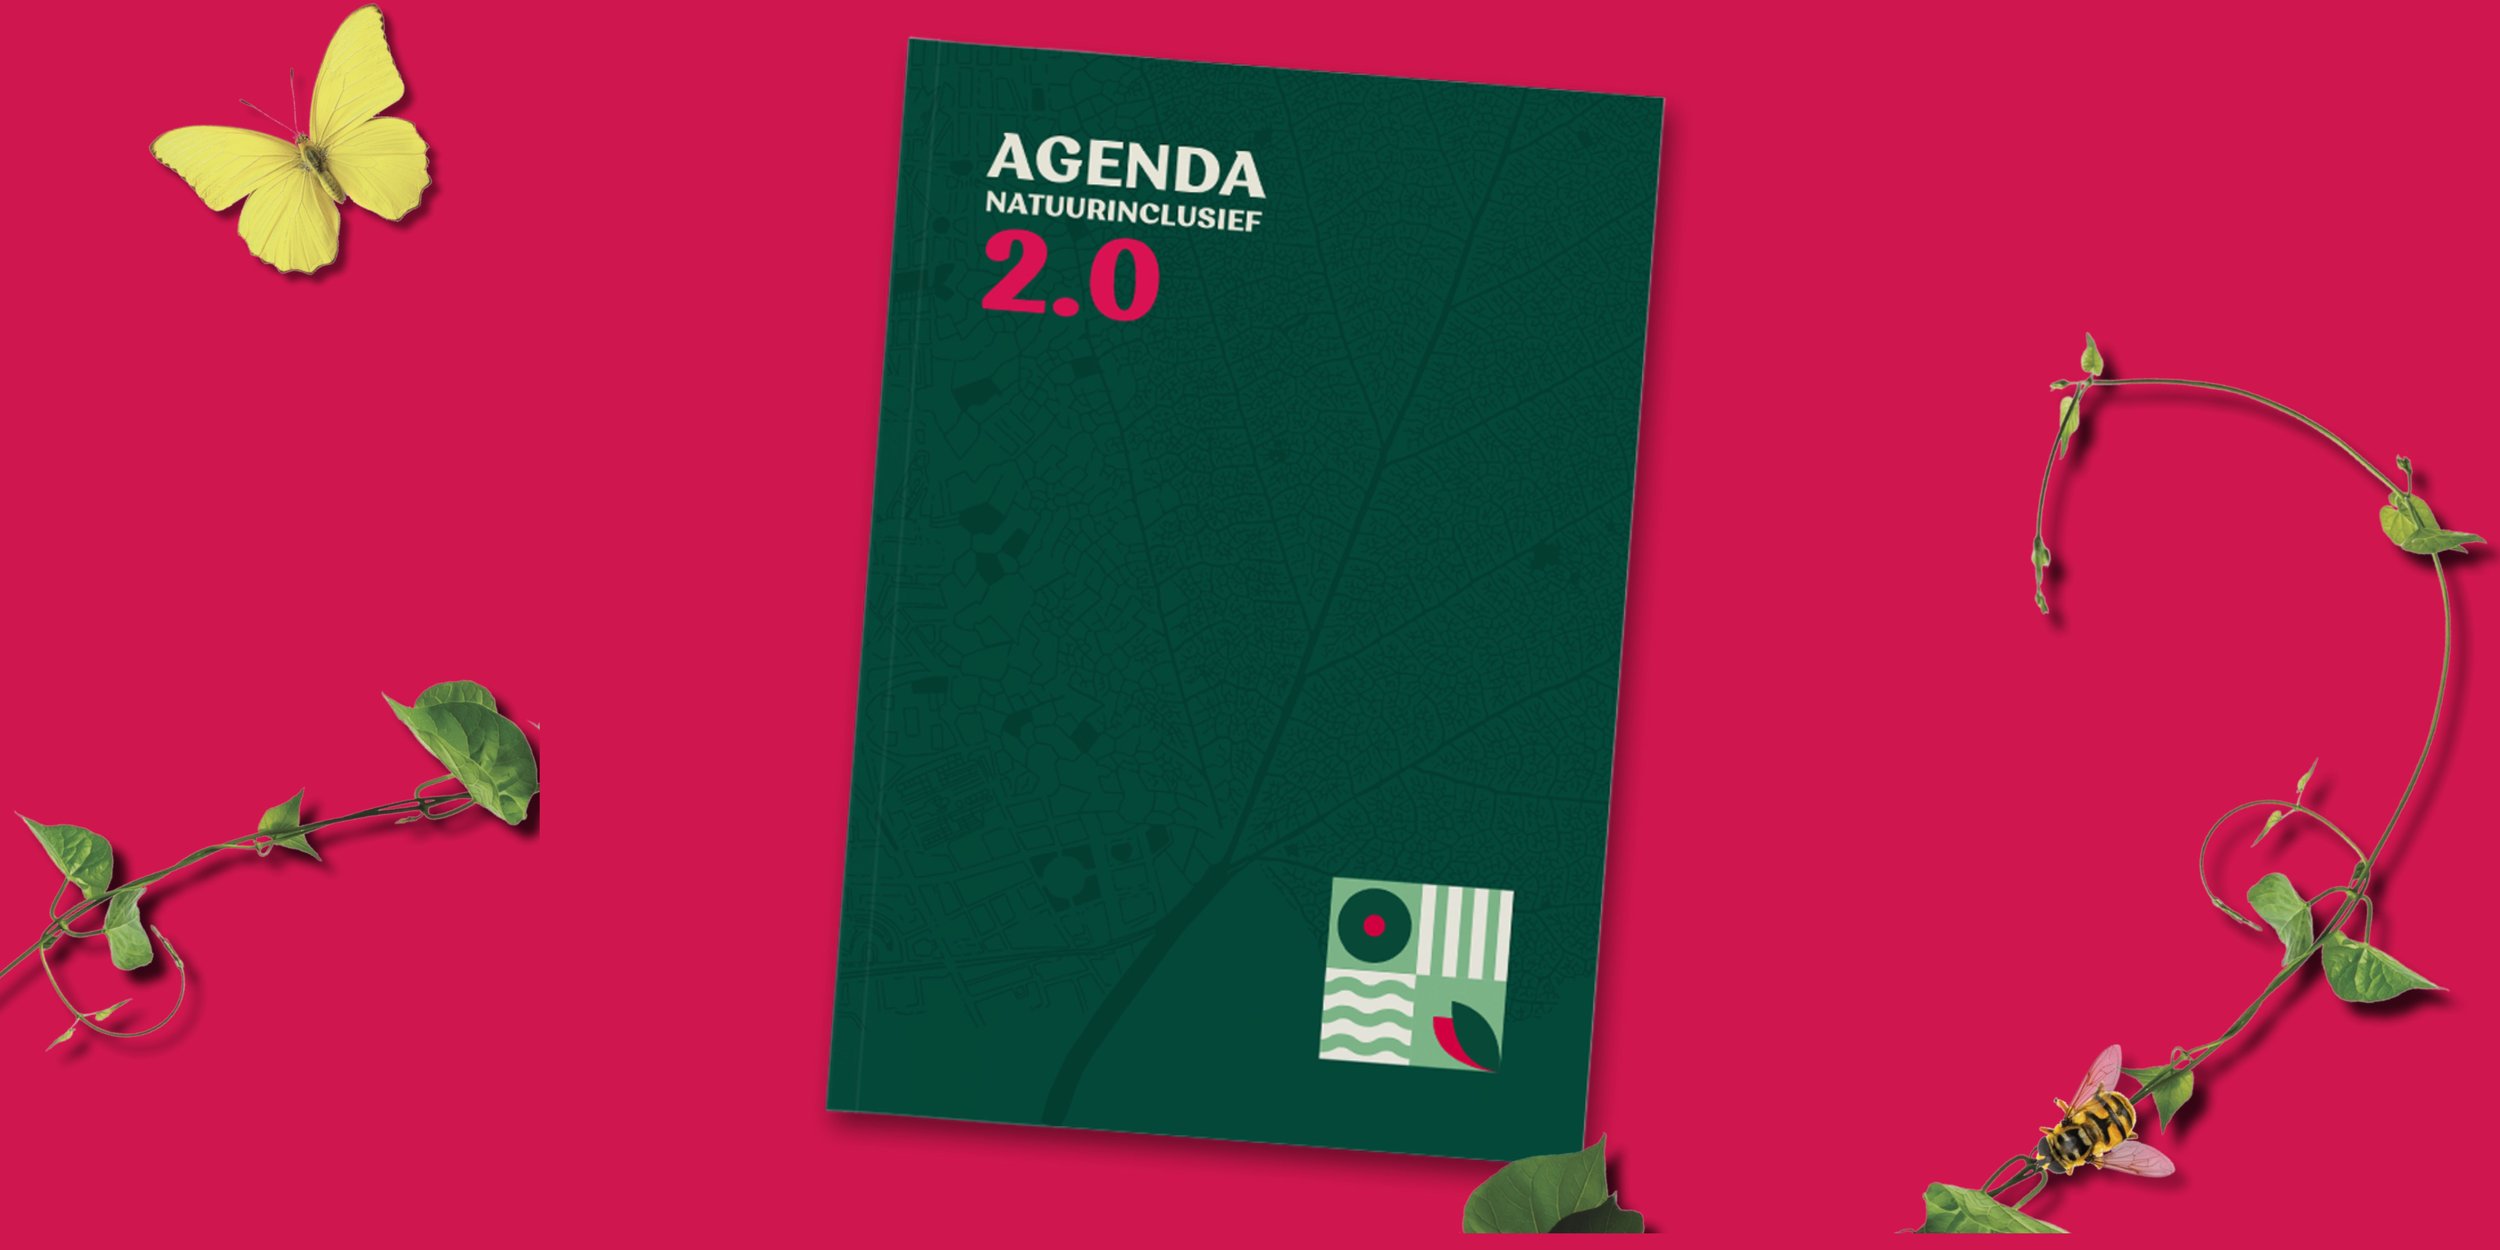 Agenda Natuurinclusief 2.0 van Collectief Natuurinclusief